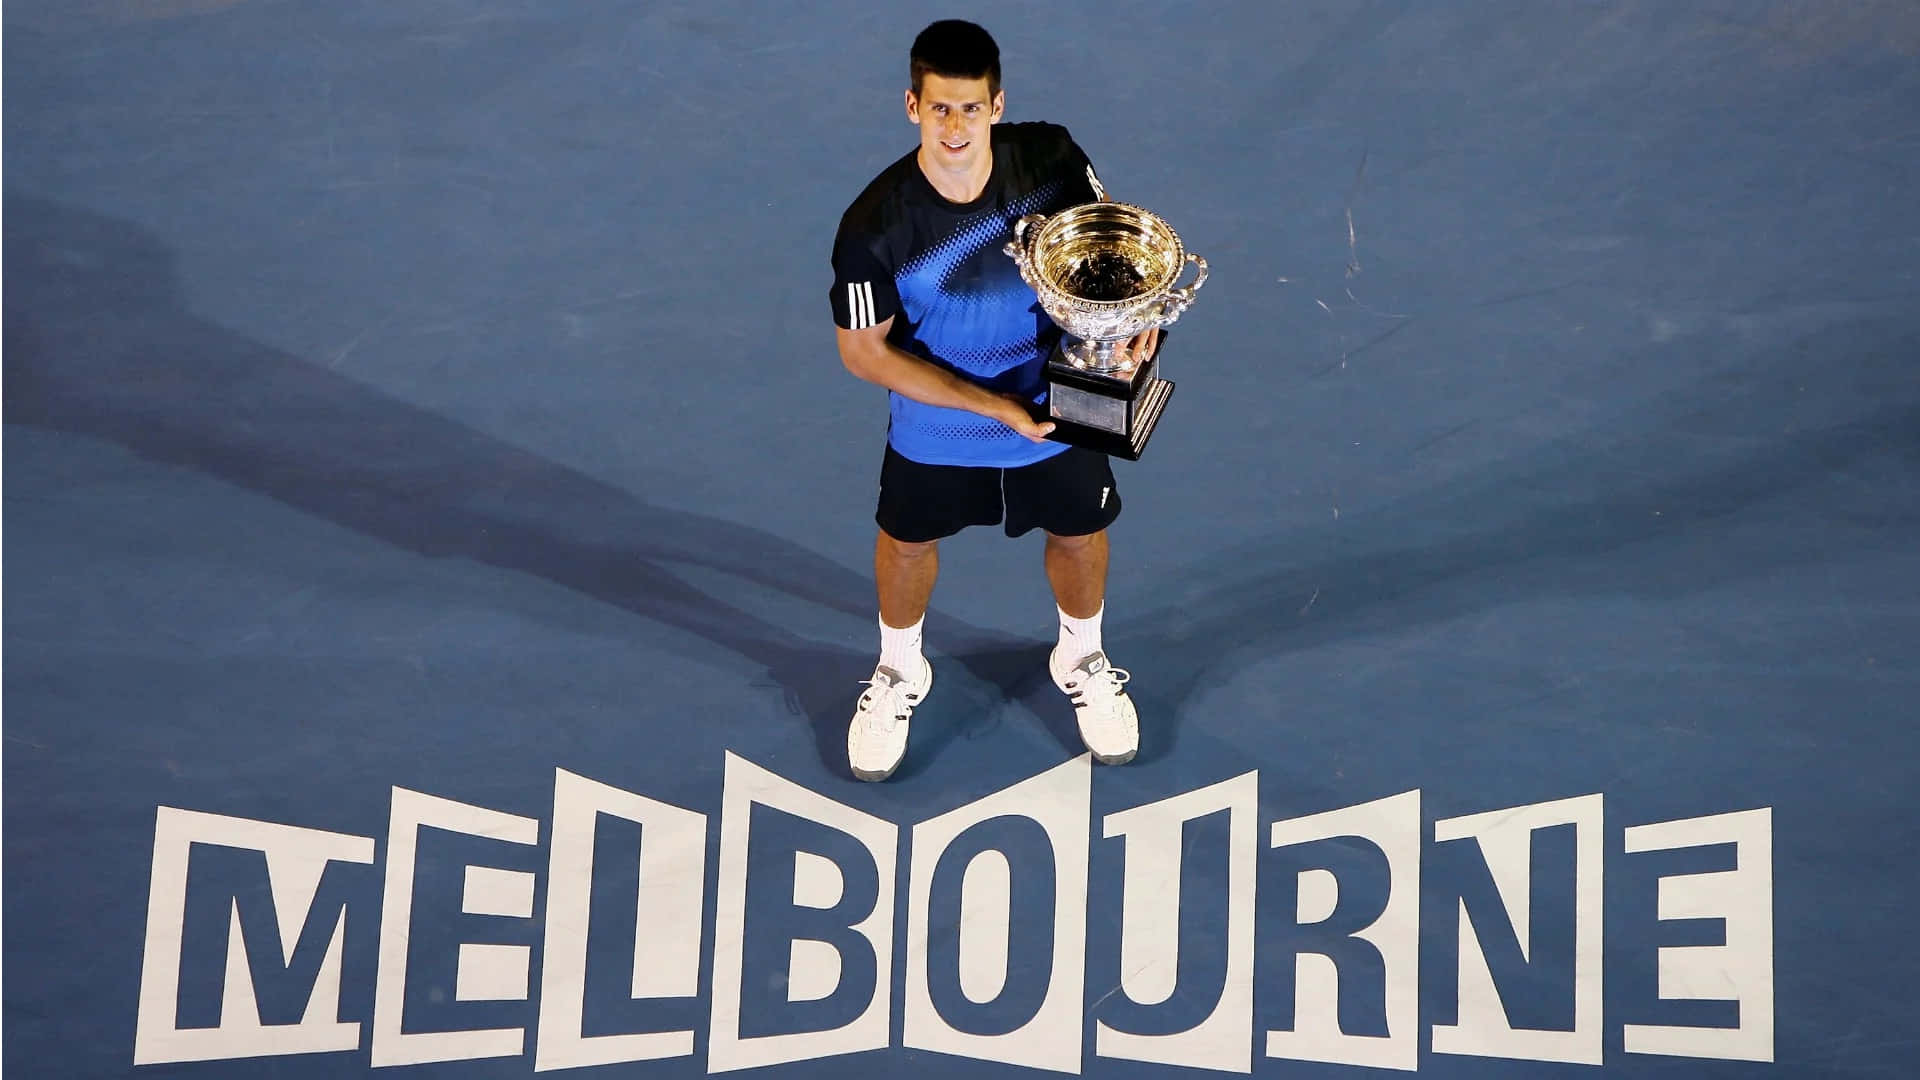 A Tennis Player Holding A Trophy On A Blue Tennis Court